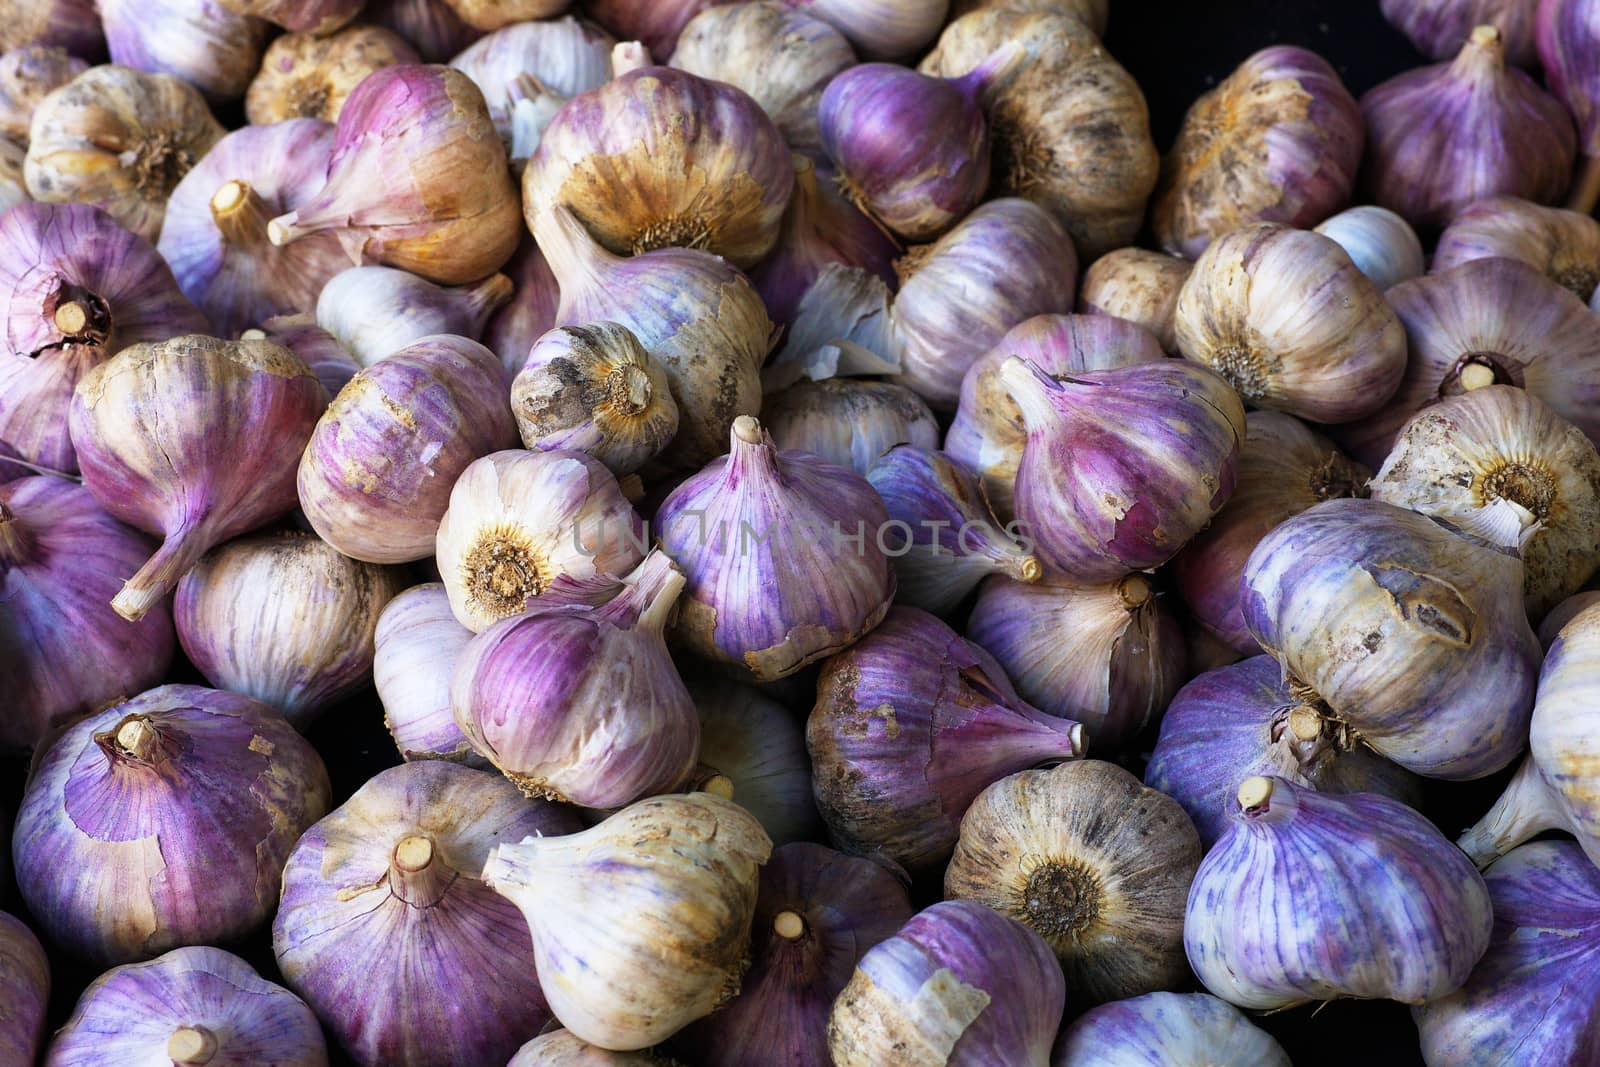 Pile of Purple Italian Garlic at the farmers market
